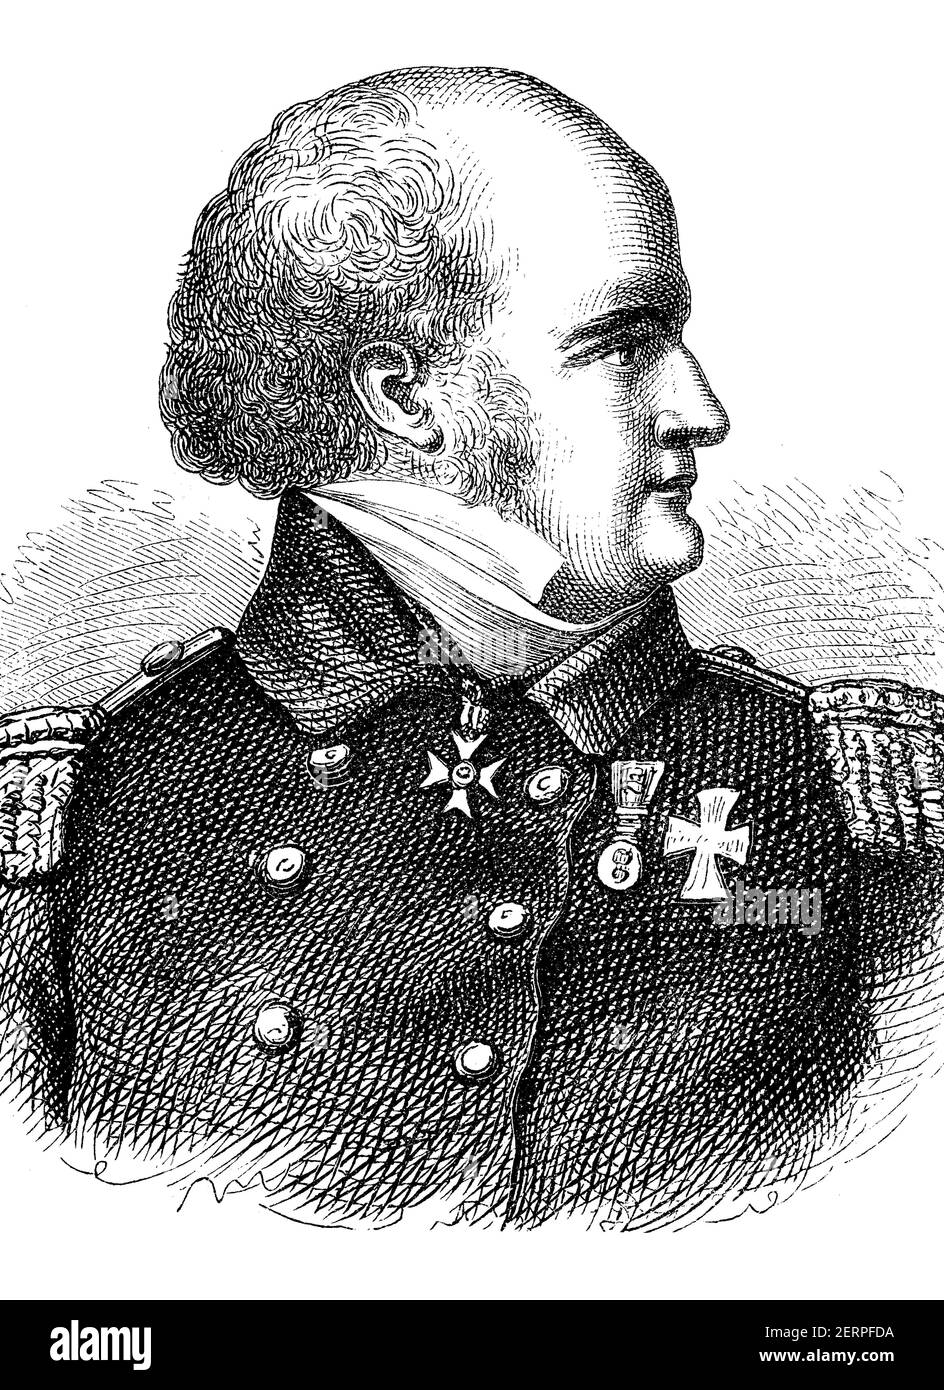 Sir John Franklin, April 15, 1786 - June 11, 1847, was a British rear admiral, polar explorer and lieutenant governor of Van Diemens Land, present-day Stock Photo